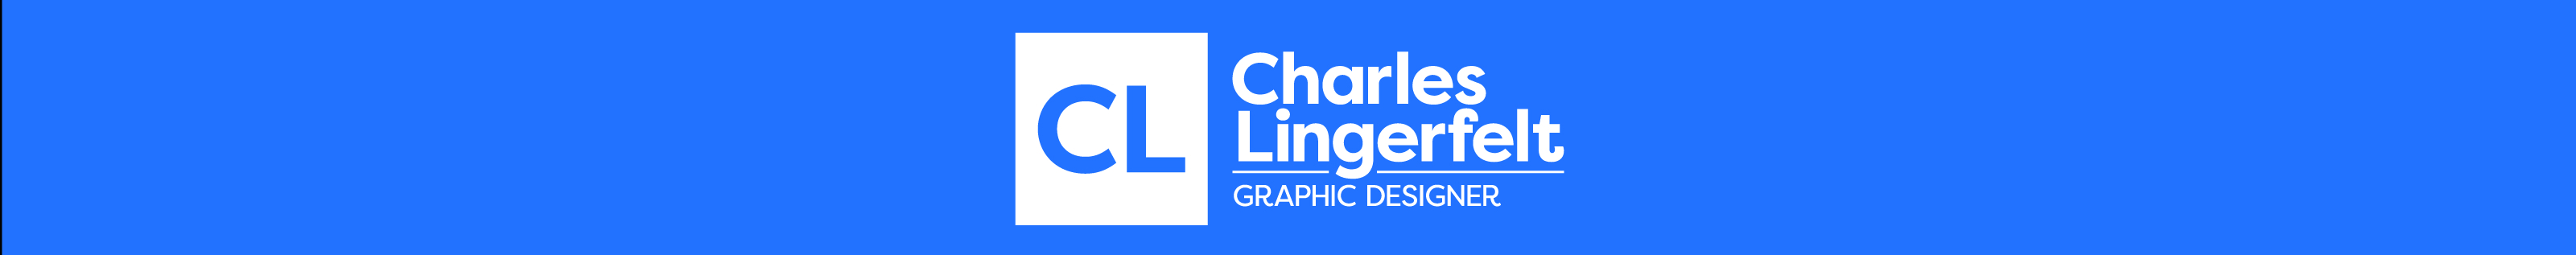 Charles Lingerfelts profilbanner